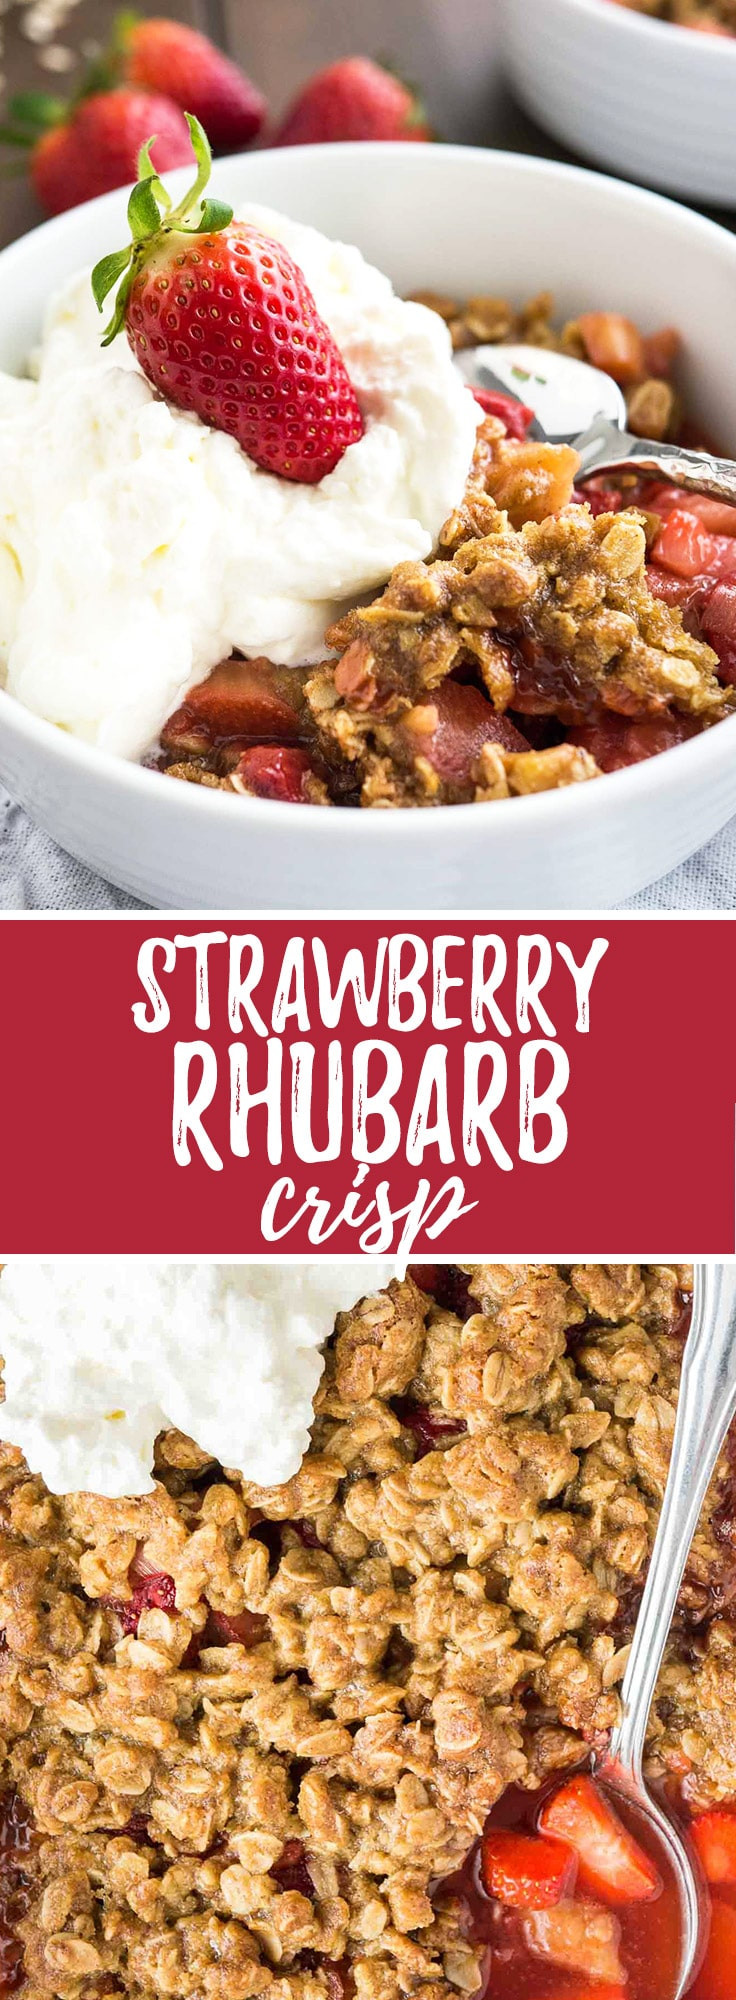 Strawberry Rubarb Dessert
 Easy Strawberry Rhubarb Crisp Recipe Prepped in less than